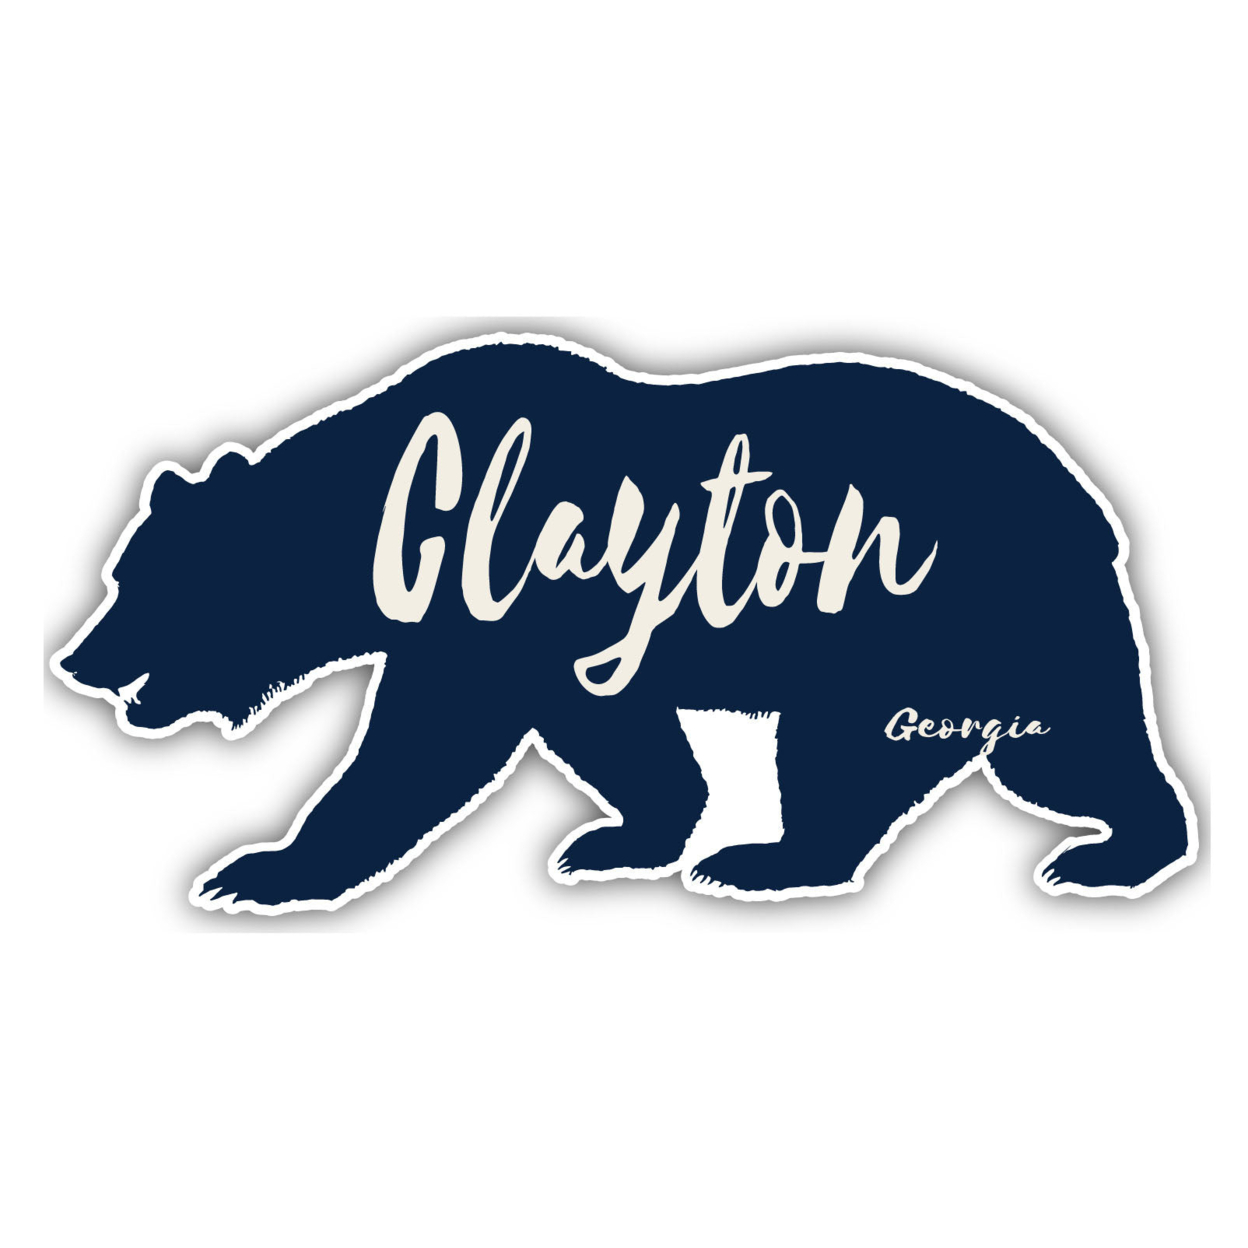 Clayton Georgia Souvenir Decorative Stickers (Choose Theme And Size) - Single Unit, 8-Inch, Bear